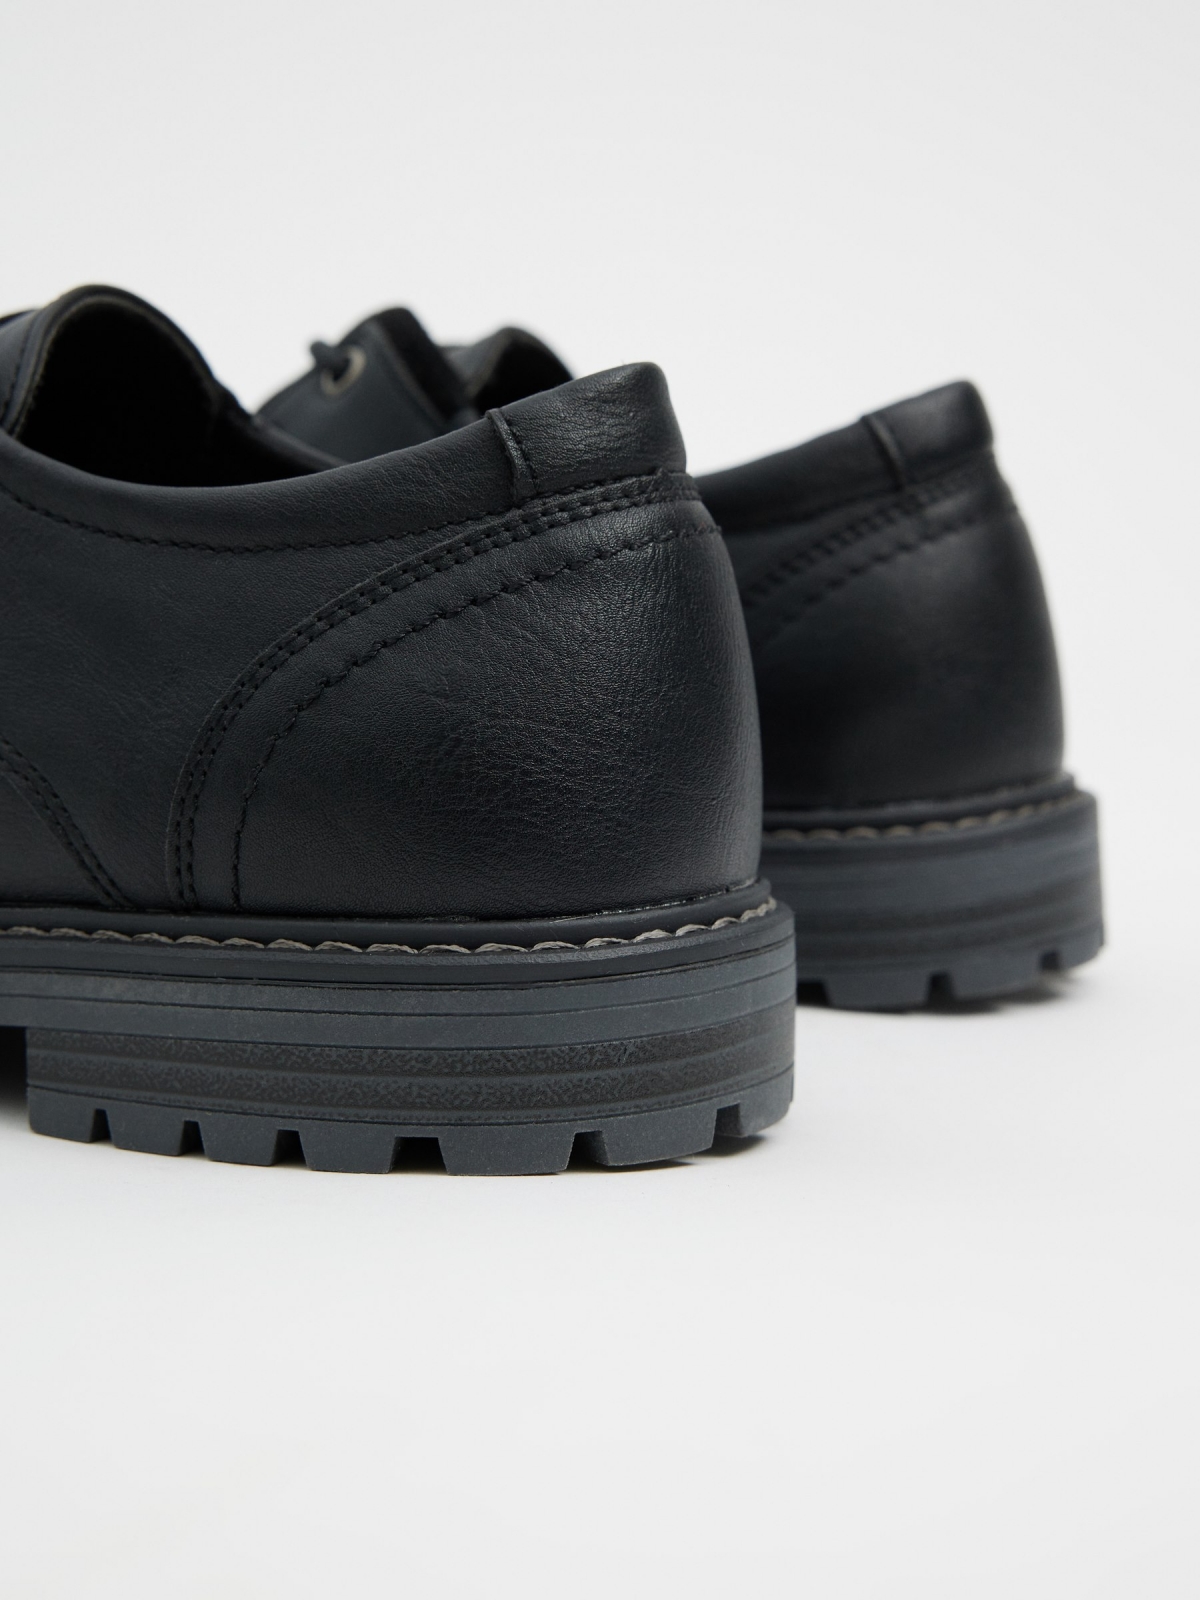 Black leather effect shoe black detail view